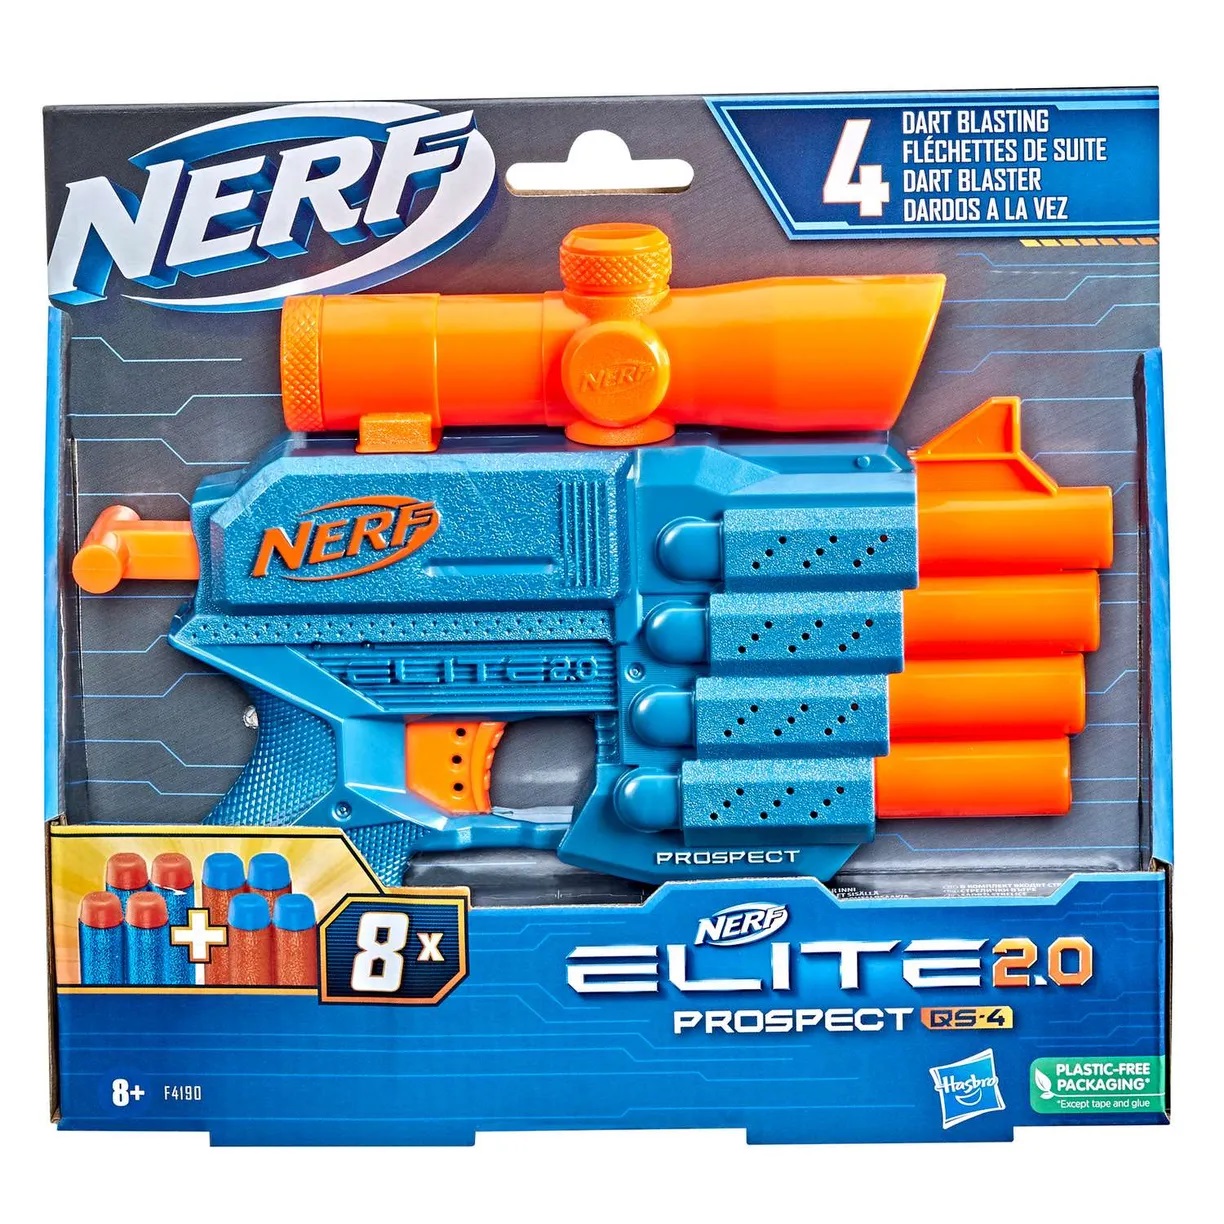 Бластер Nerf Elite 2.0 F4190 Проспект QS4